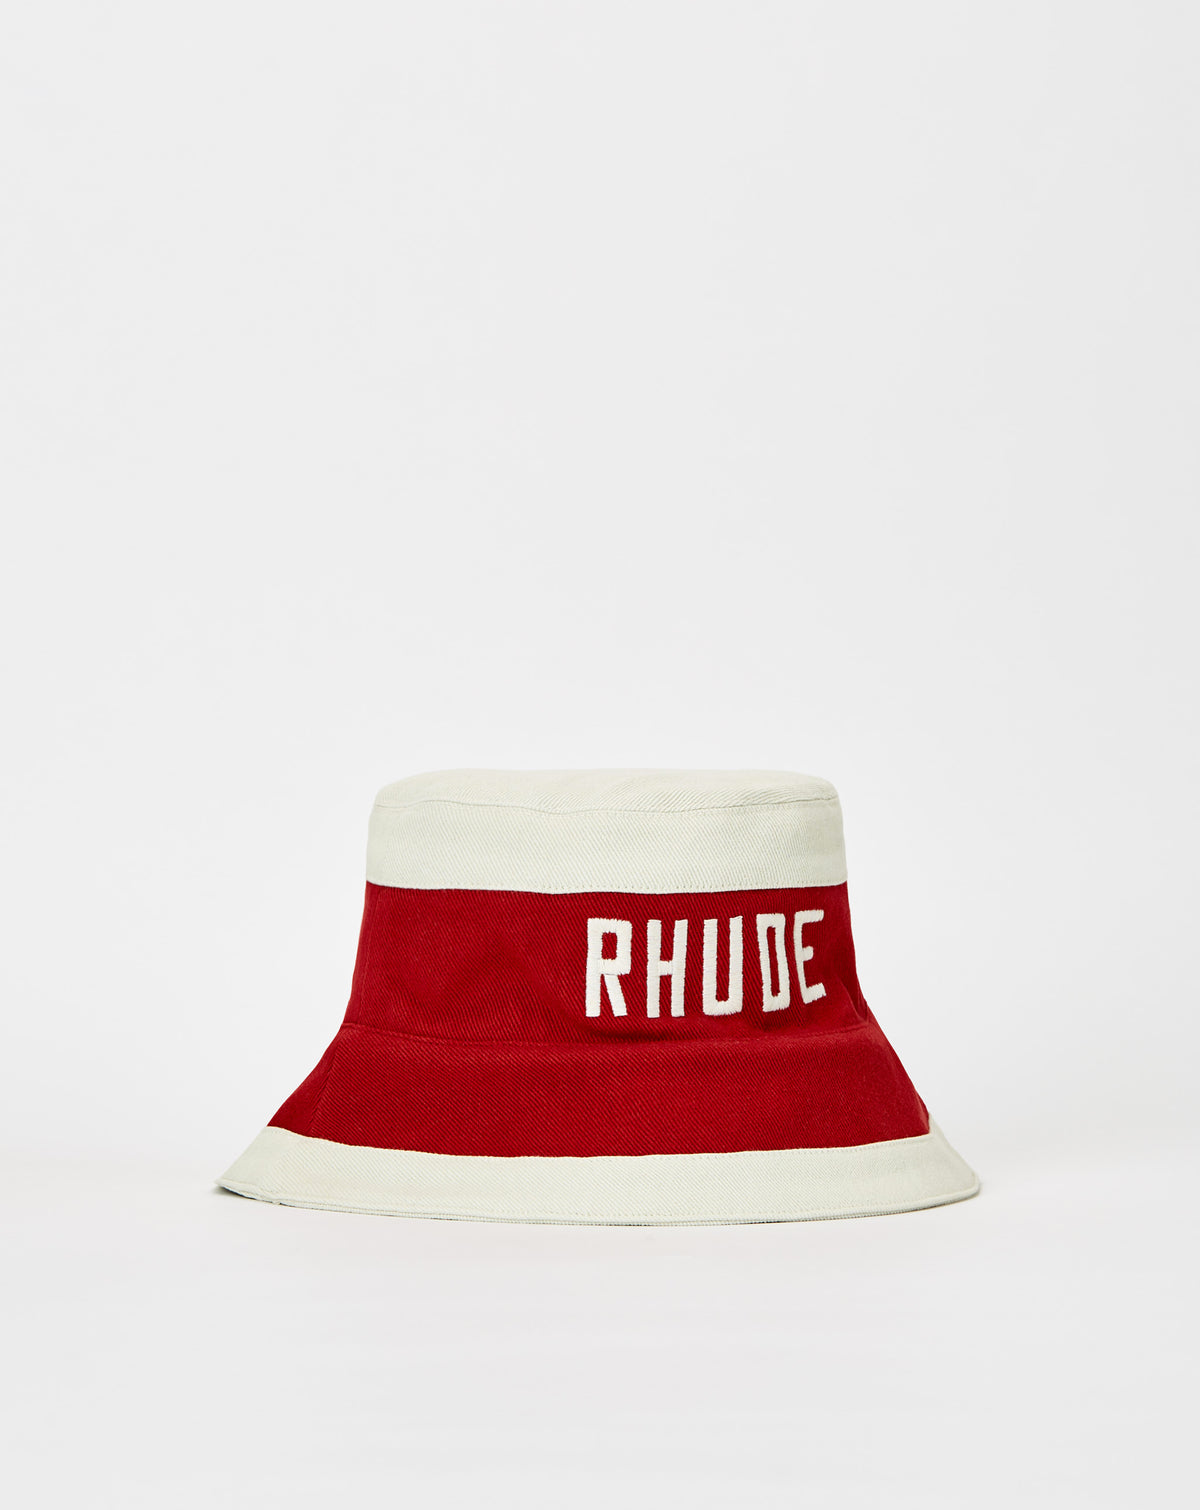 Rhude Rhude East Hampton Bucket Hat - Rule of Next Accessories